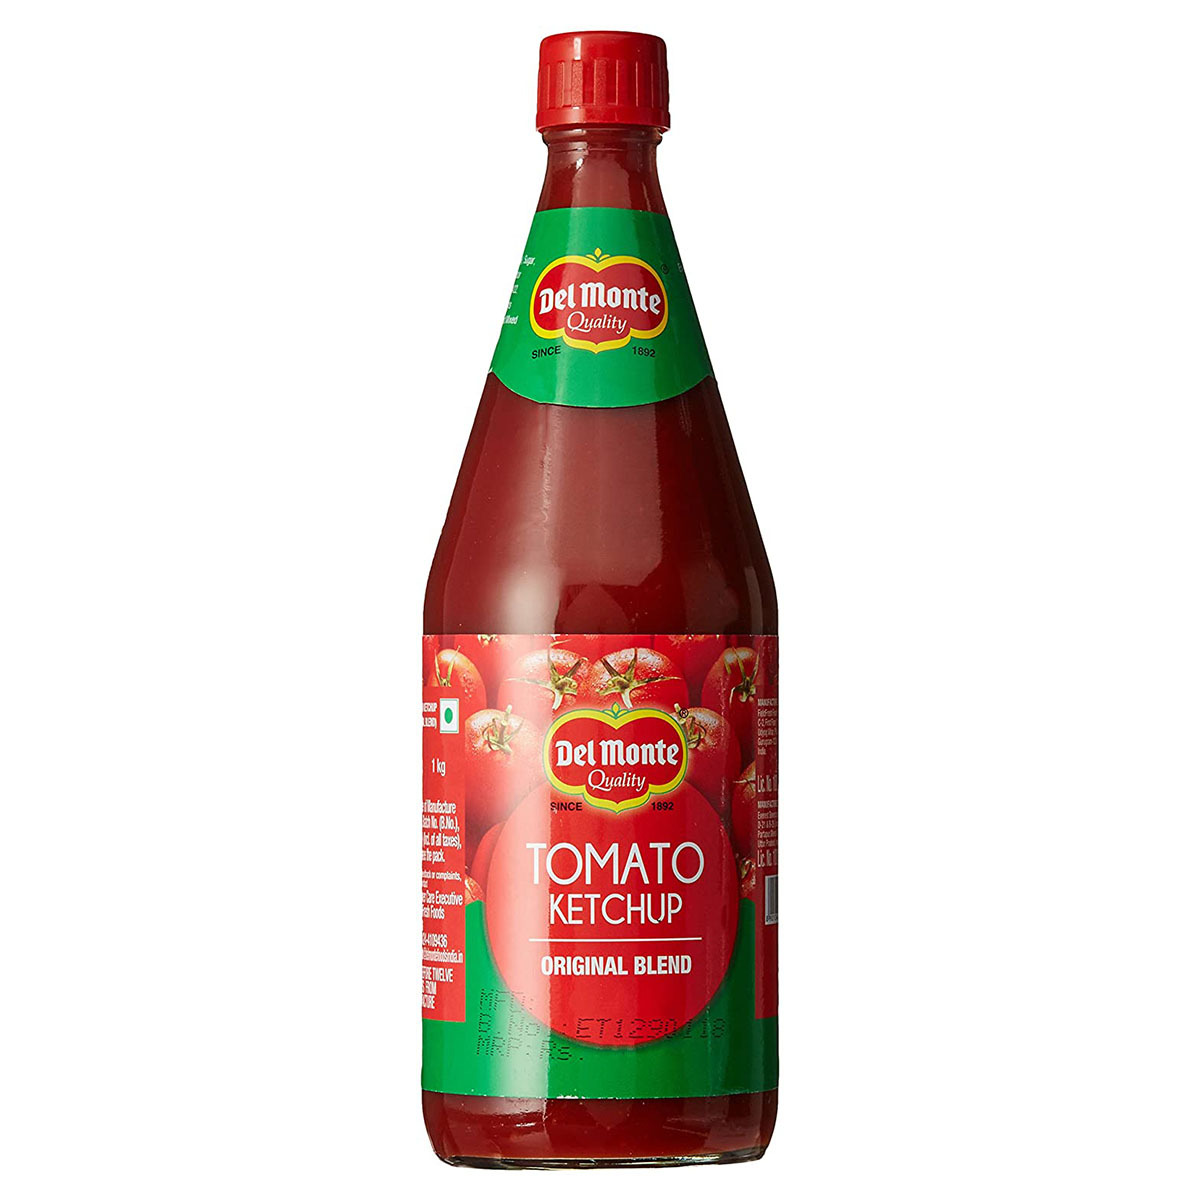 Delmonte Tomato Ketchup Glass Bottle 1kg